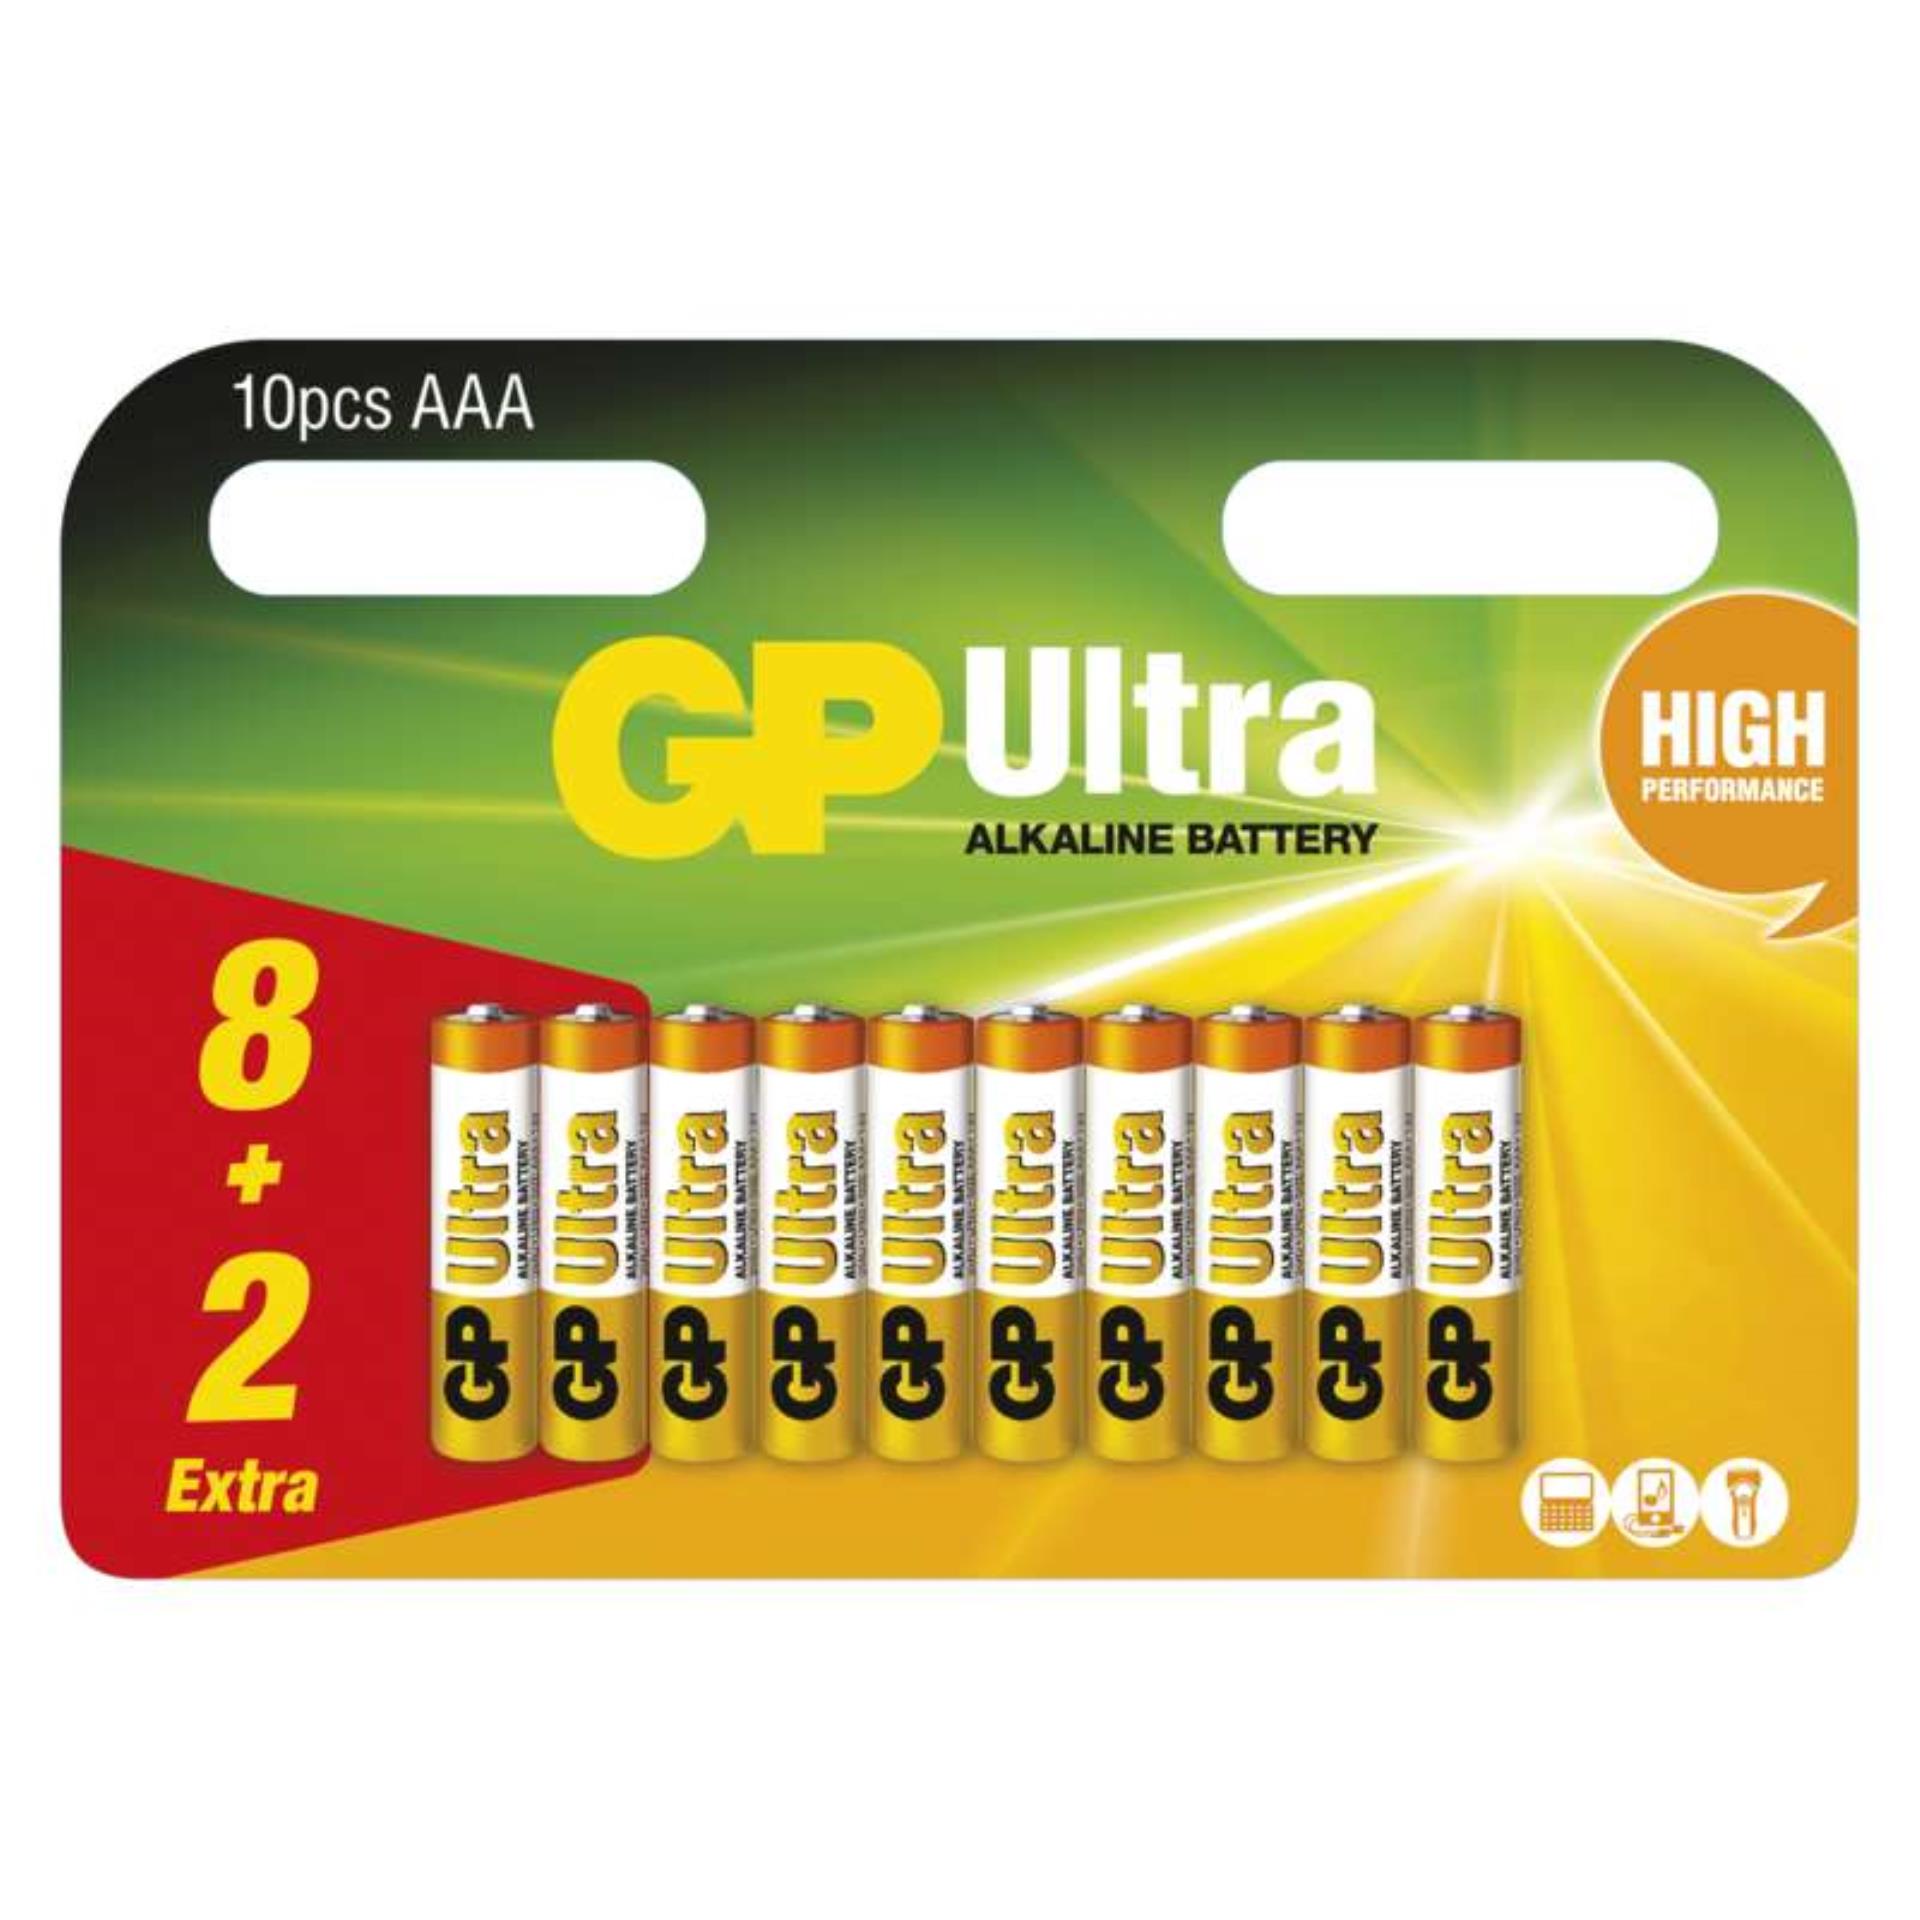 Baterie GP Ultra Alkaline LR03, typ AAA, 1,5V, 8+2 ks